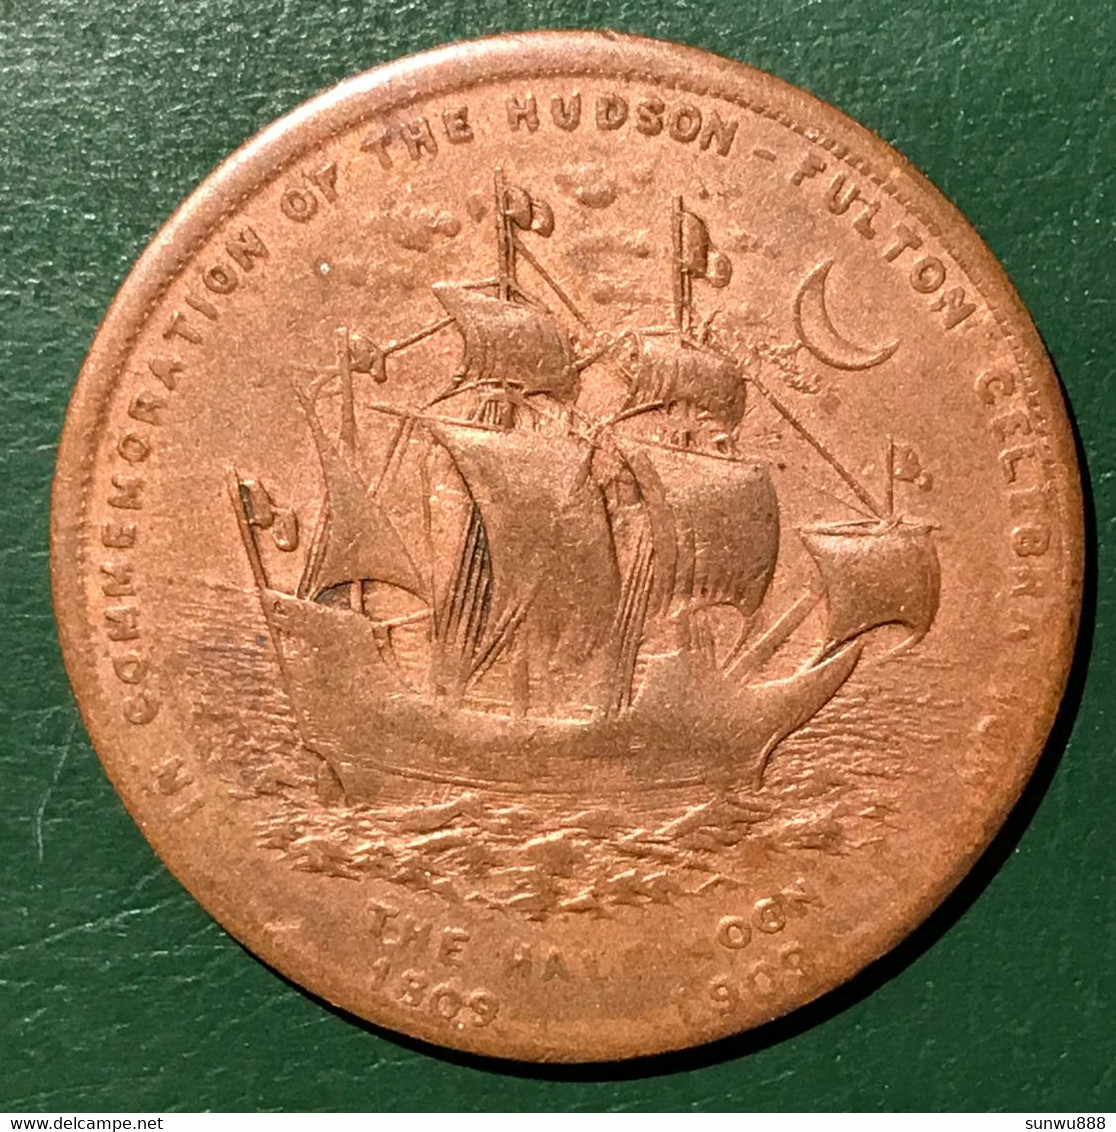 Hudson Fulton Celebration The Half Moon 1609-1909 New York Boat Medal Token RARE (fixed Price) - Profesionales/De Sociedad